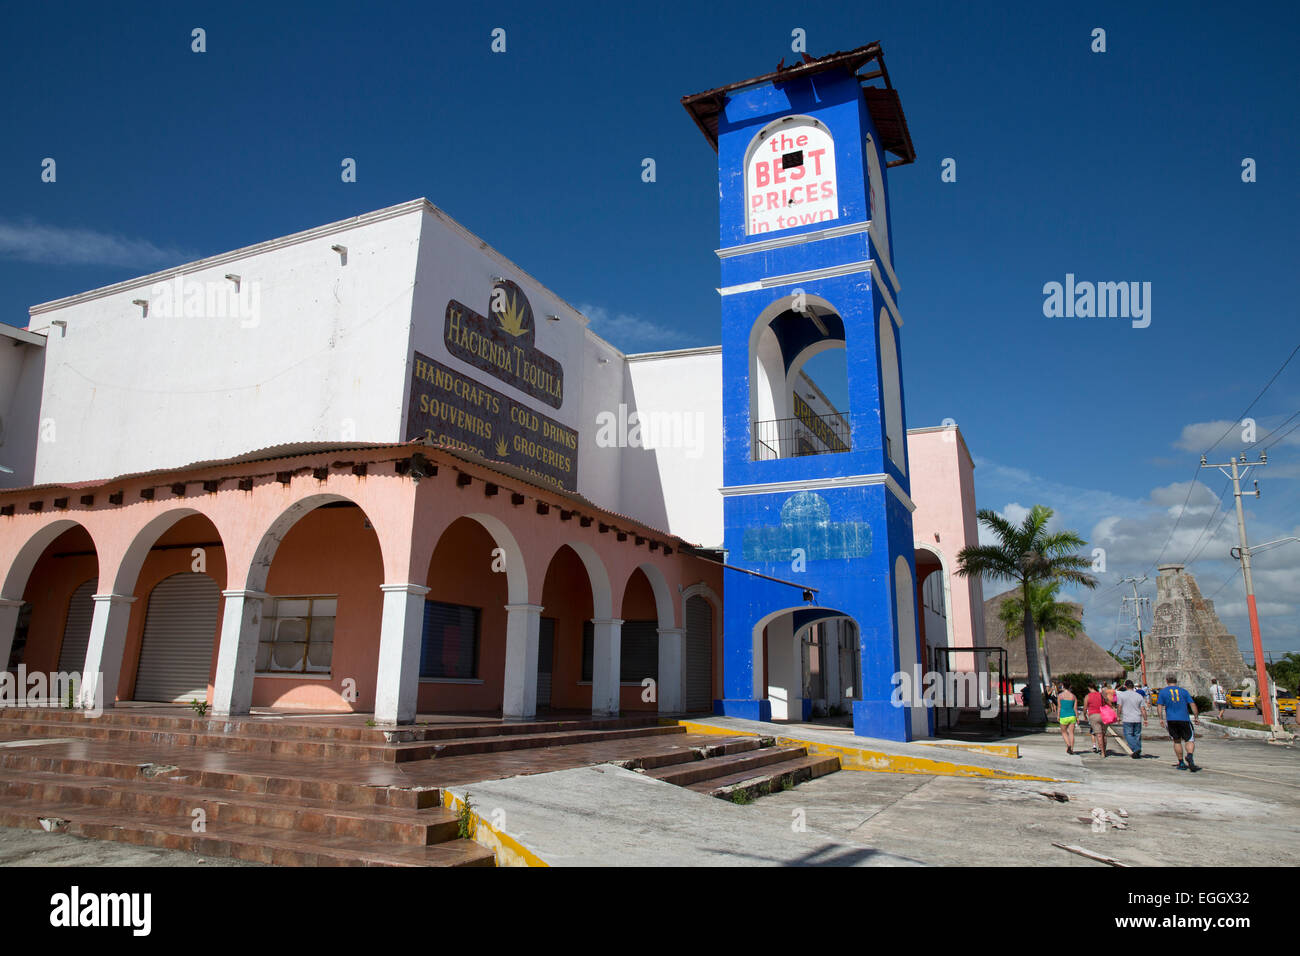 Abandoned shopping mall in the cruise ship port at Mahahual, Quintana Roo, Mexico Stock Photo